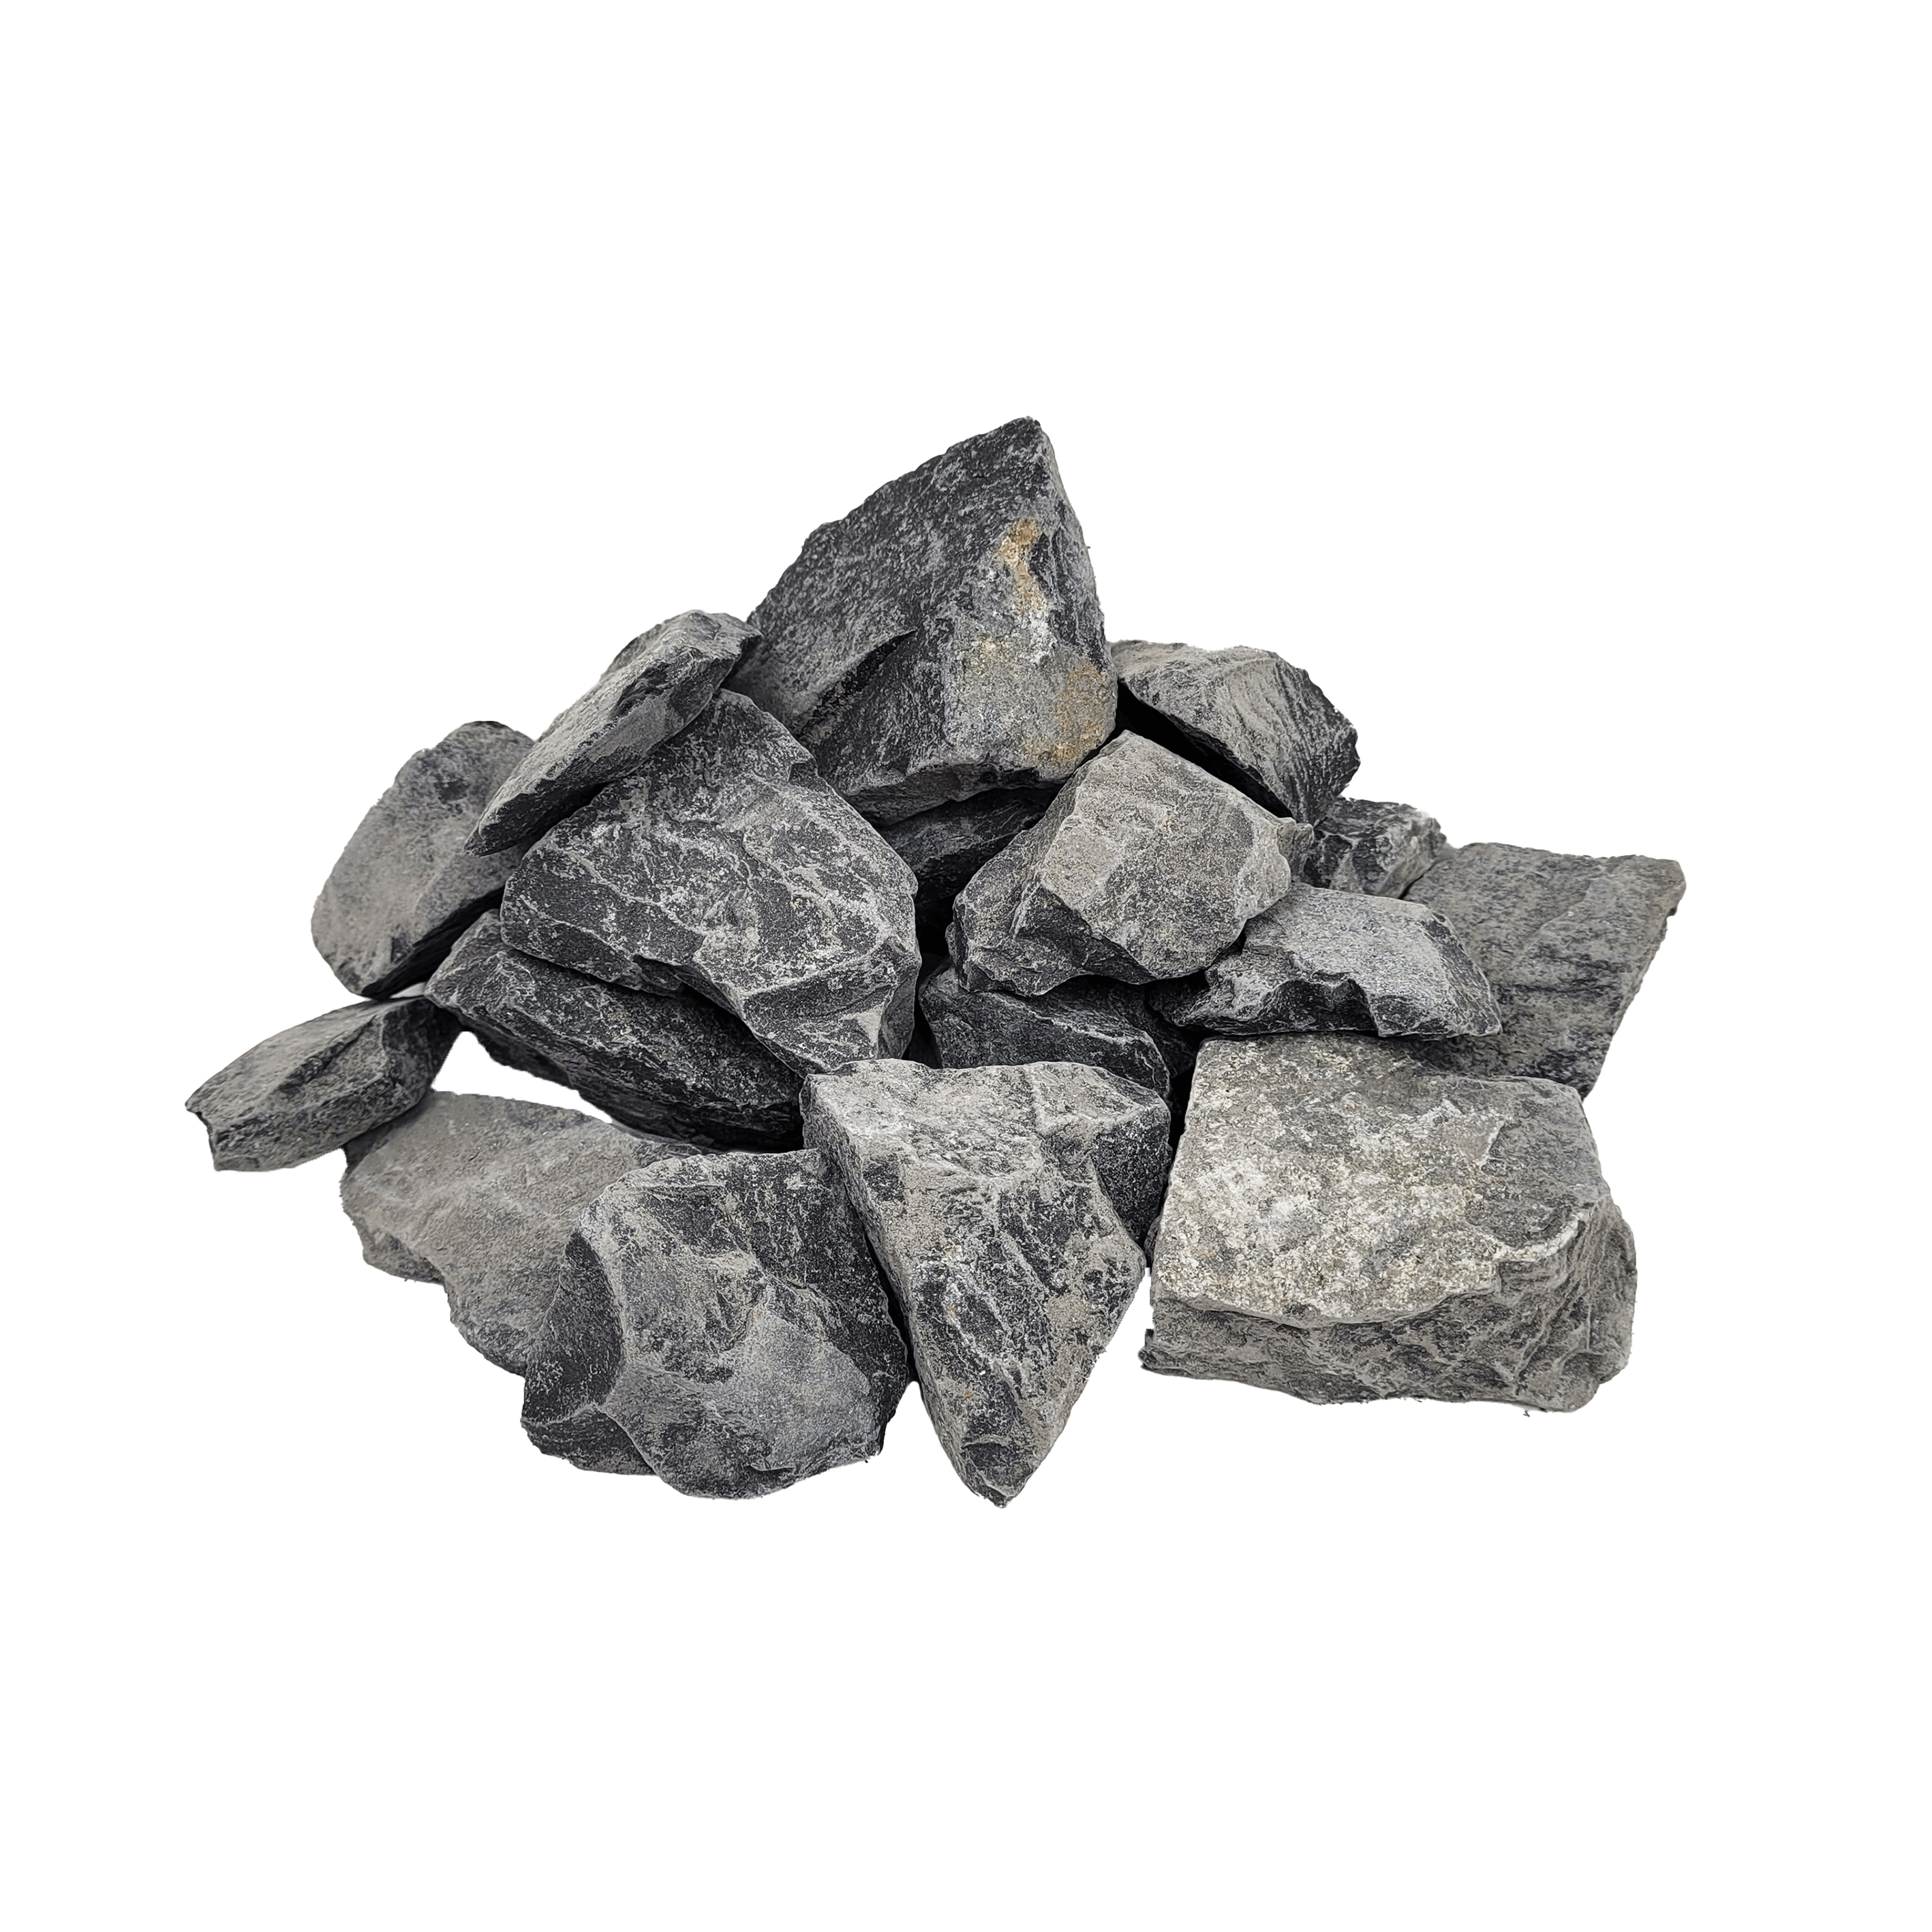 Pietre decor acvarii si terarii, Wio, Black Venom Nano Rocks, 2 kg, 1-10 cm